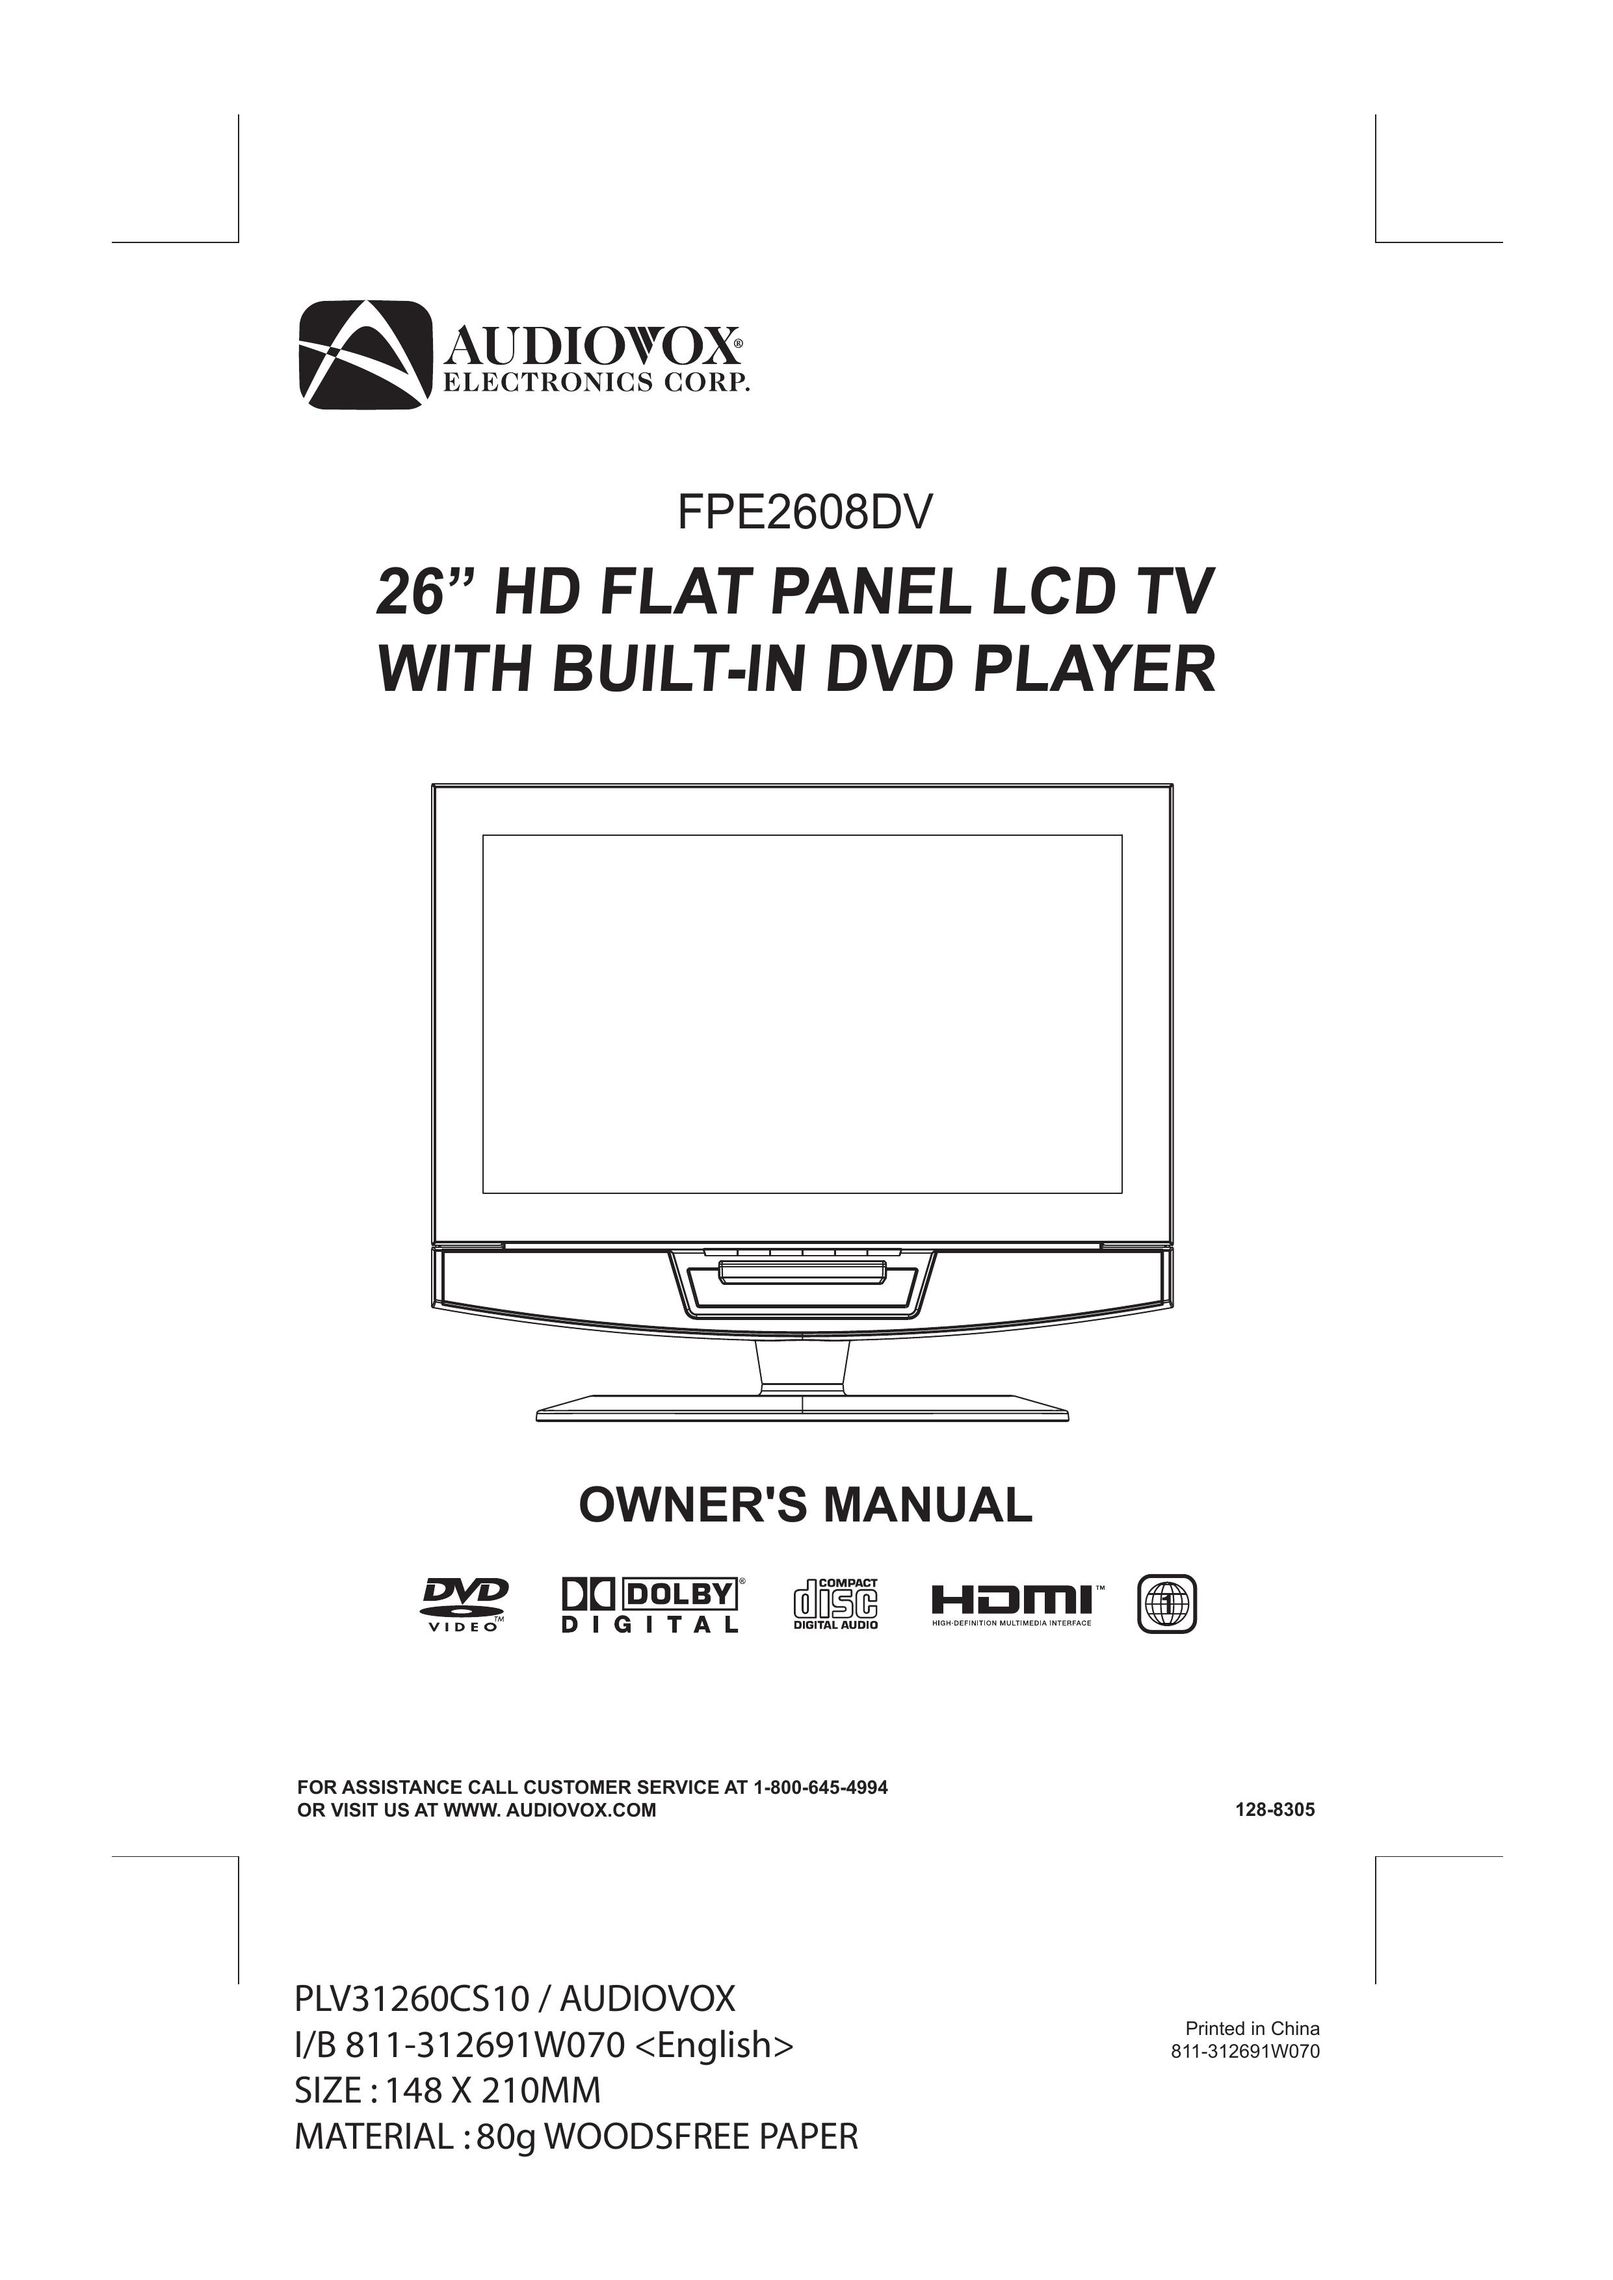 Audiovox FPE2608DV Flat Panel Television User Manual